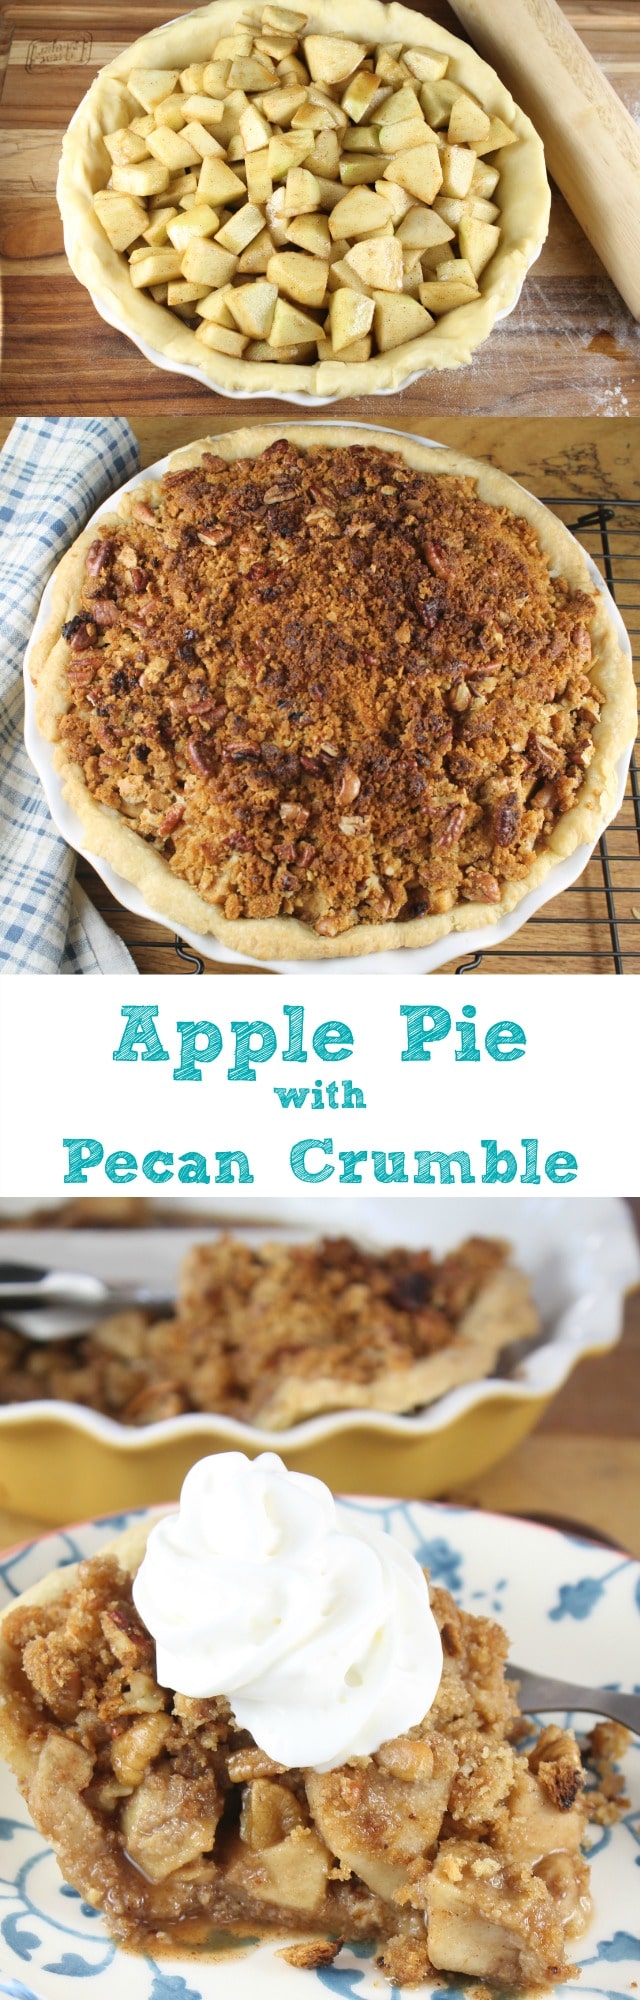 Apple Pie with Pecan Crumble Recipe found at missinthekitchen.com